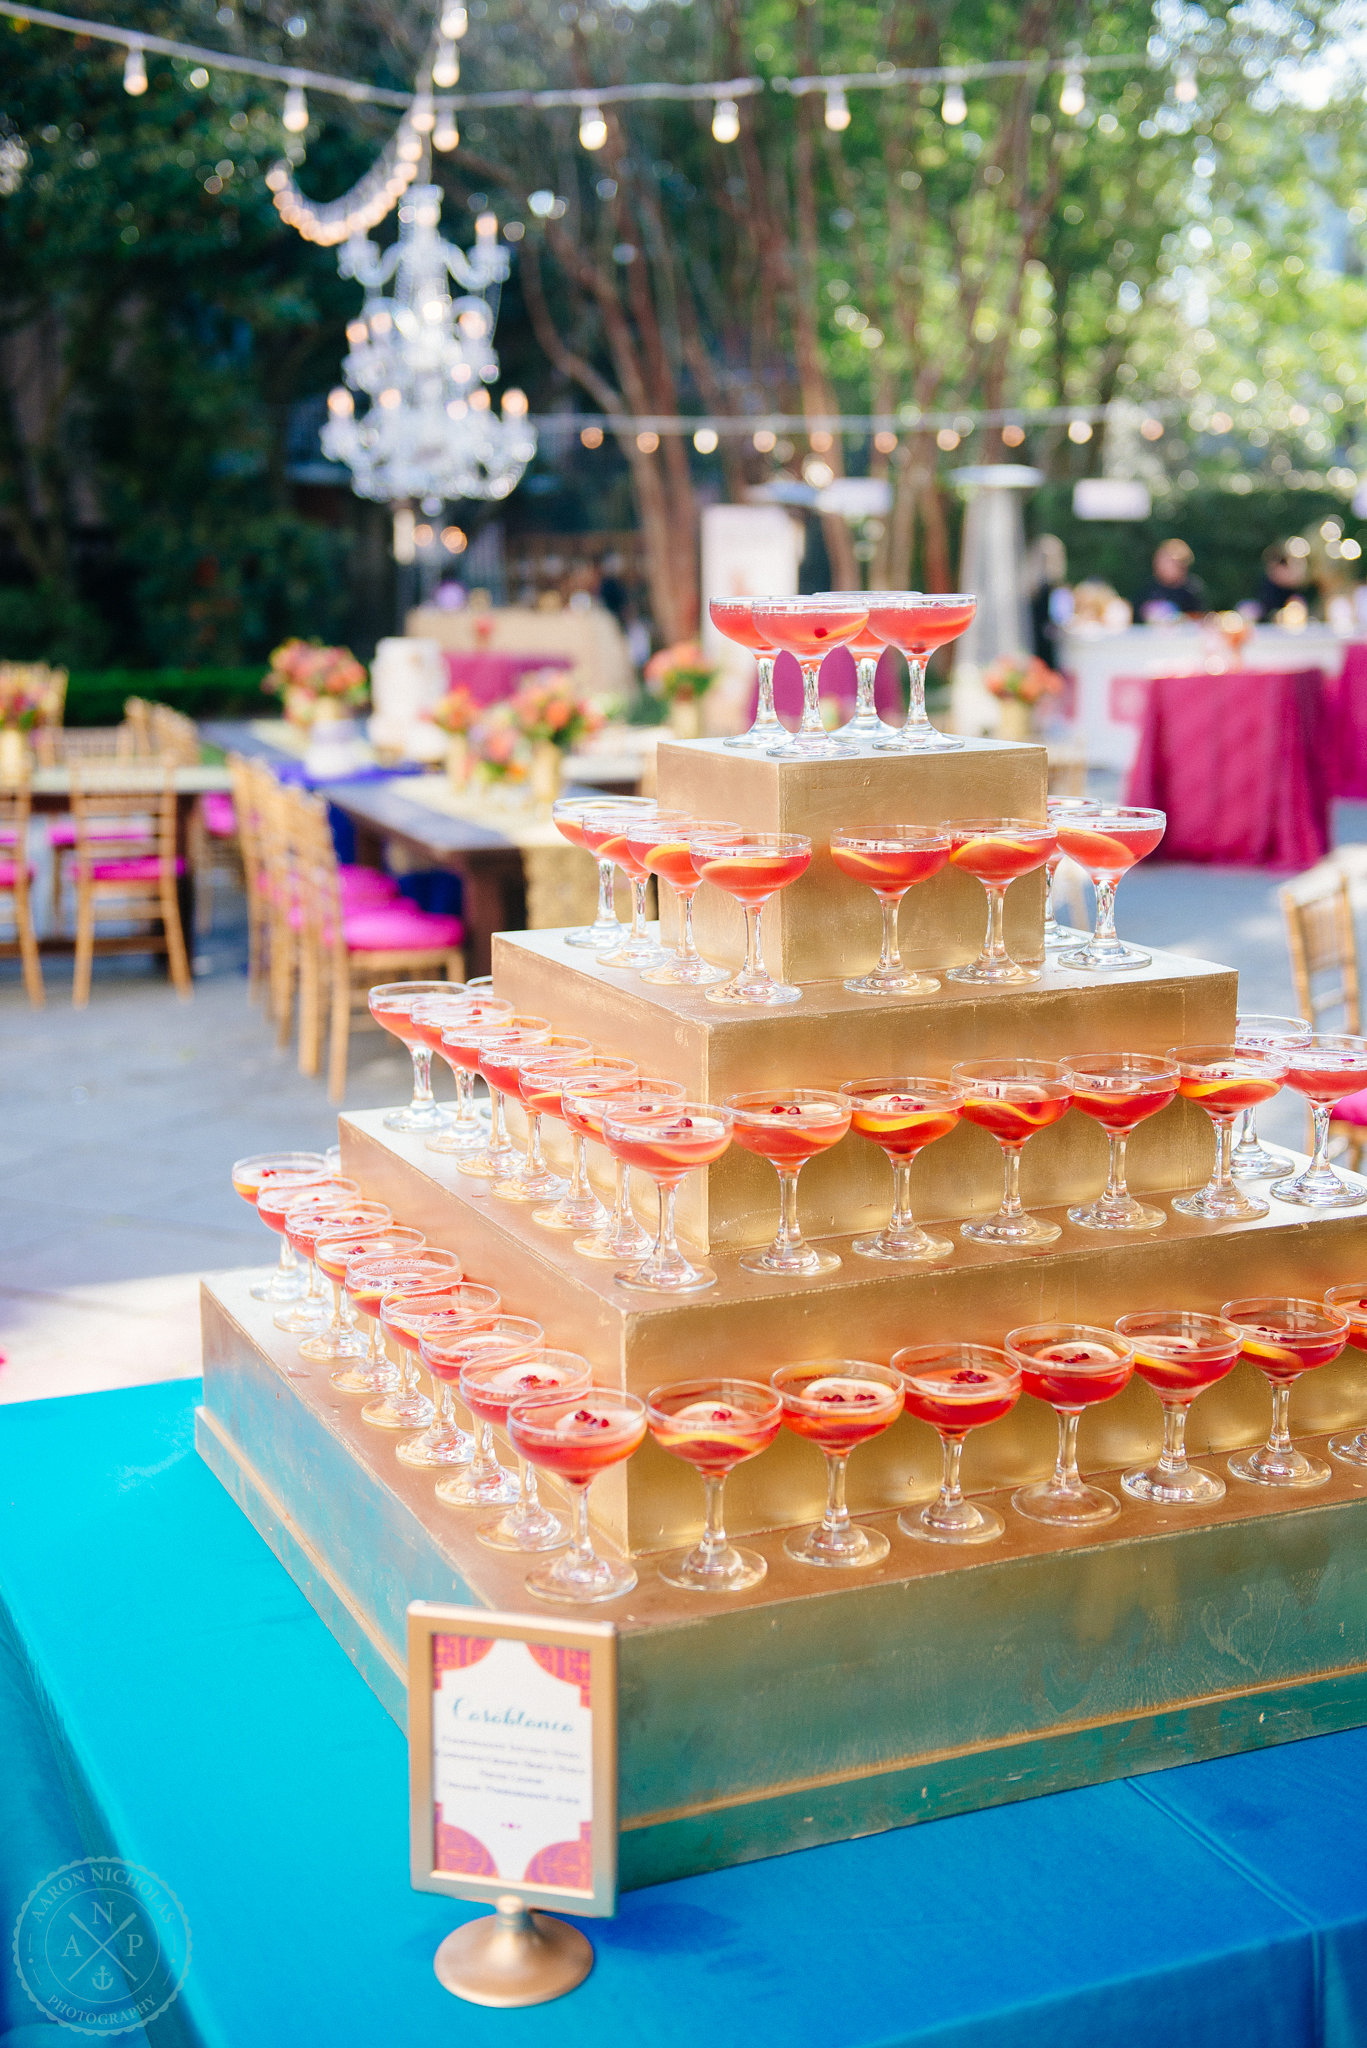 casablanca-style-champange-pyramid-with-sangria-moroccan-inspired-garden-wedding-reception-fuchsia-blue-orange-details